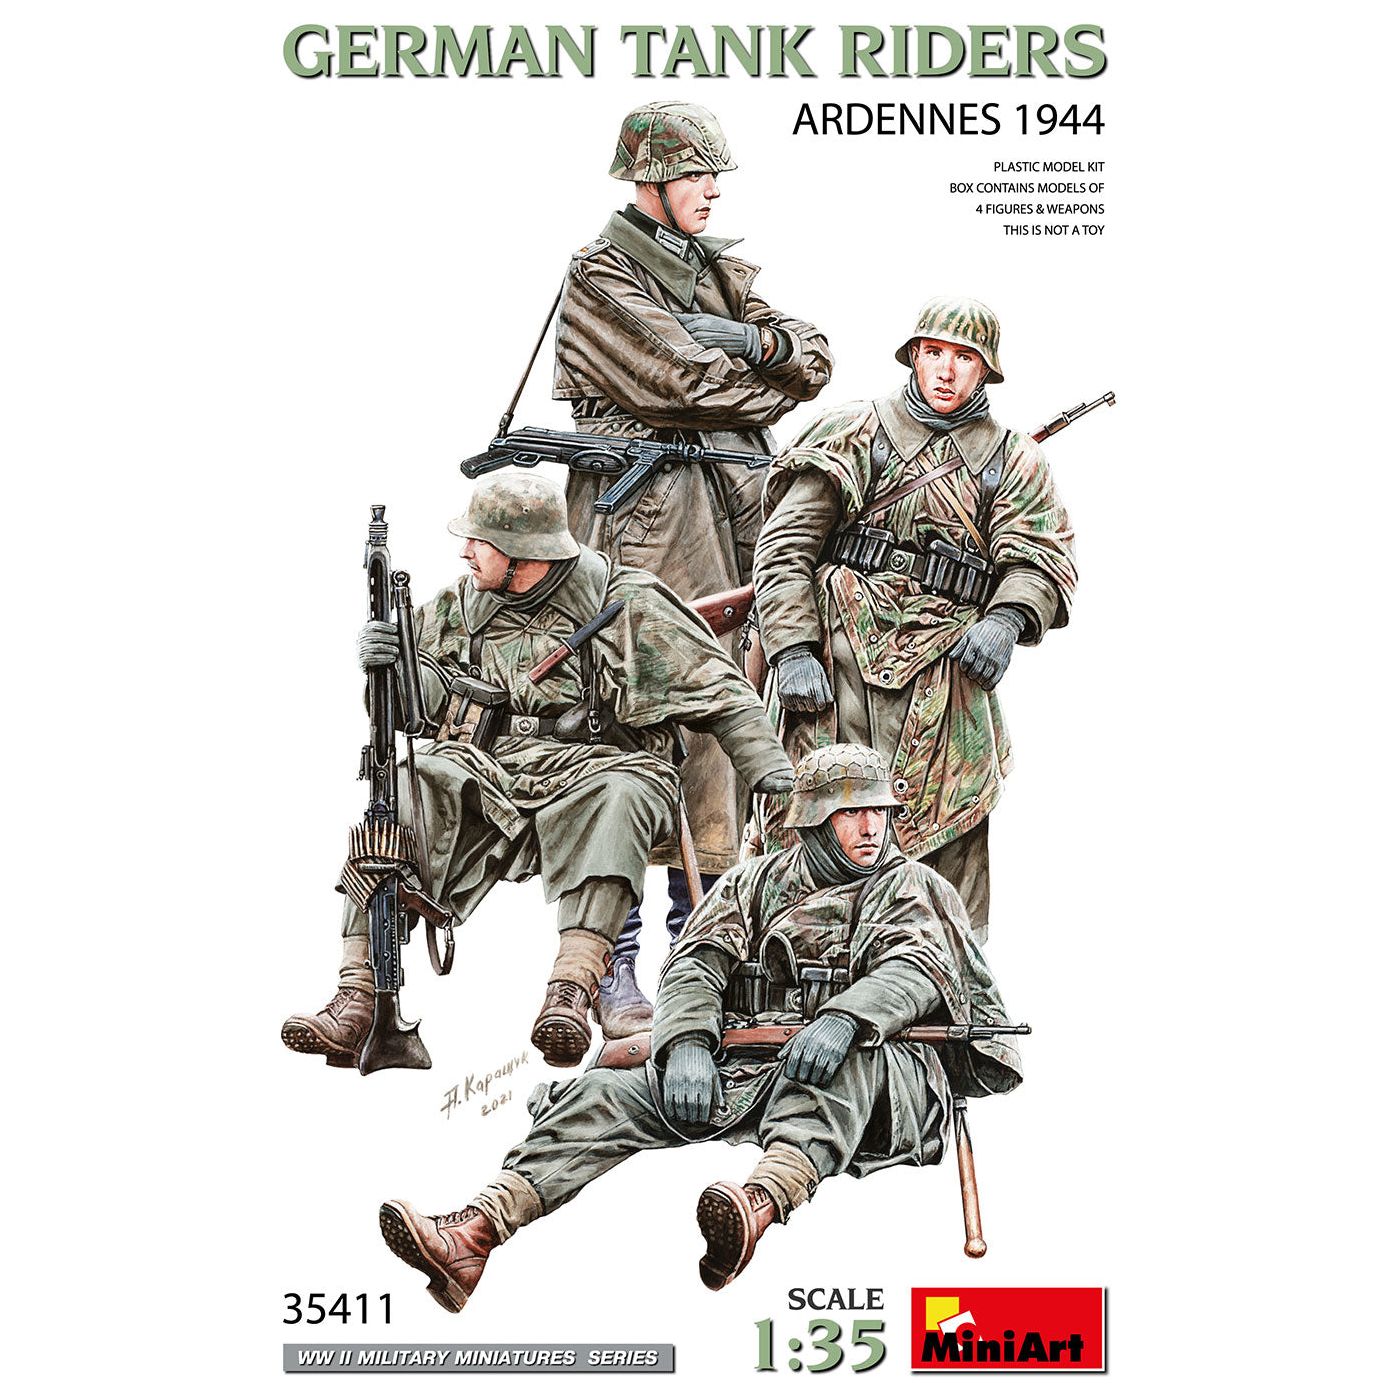 MINIART 1/35 German Tank Riders Ardennes 1944